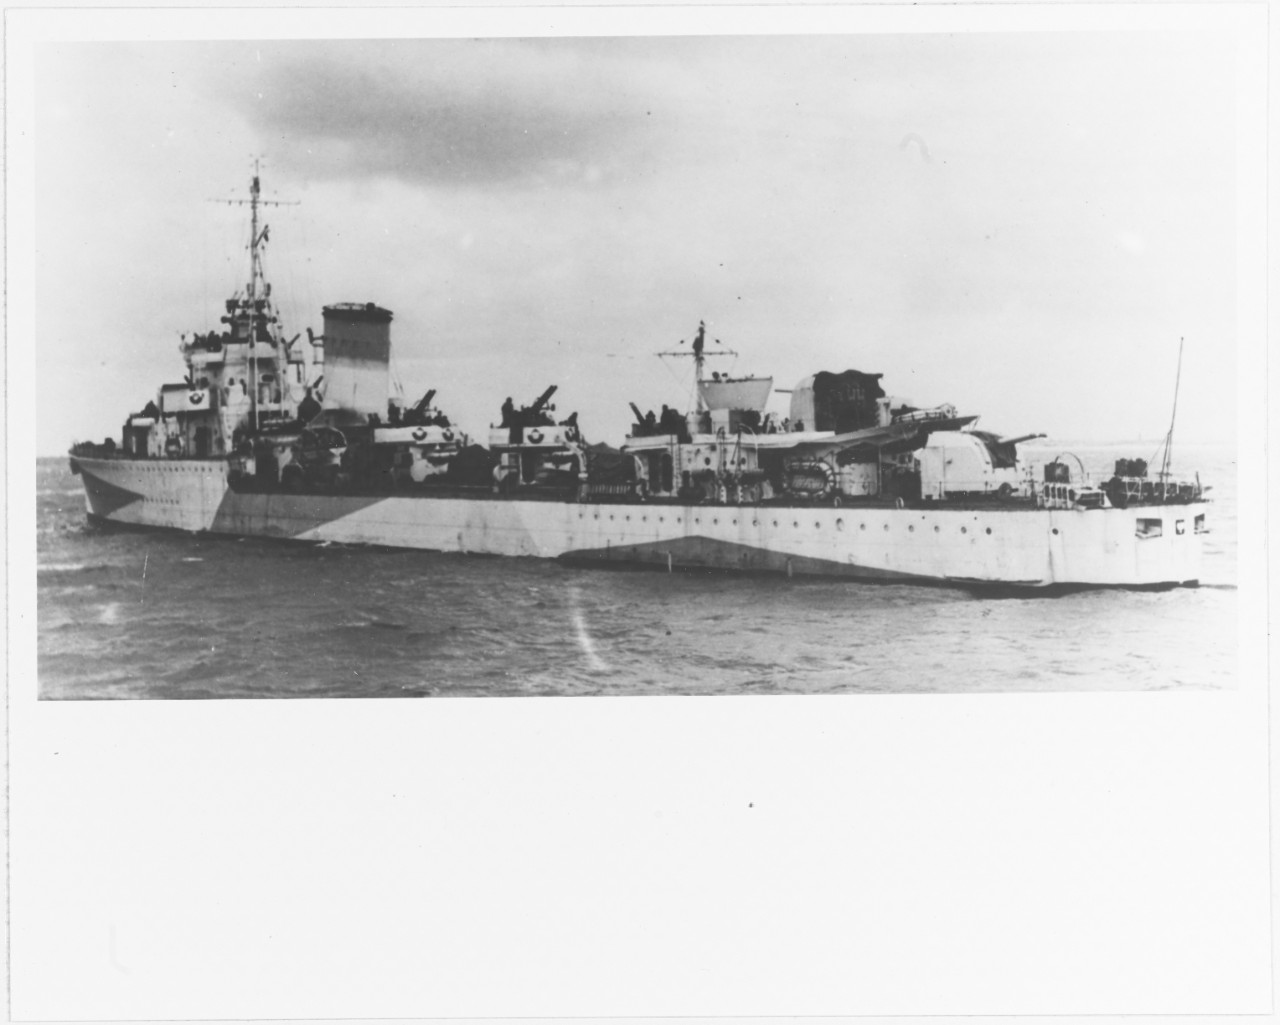 BLYSKAWICA (Polish destroyer, 1936)